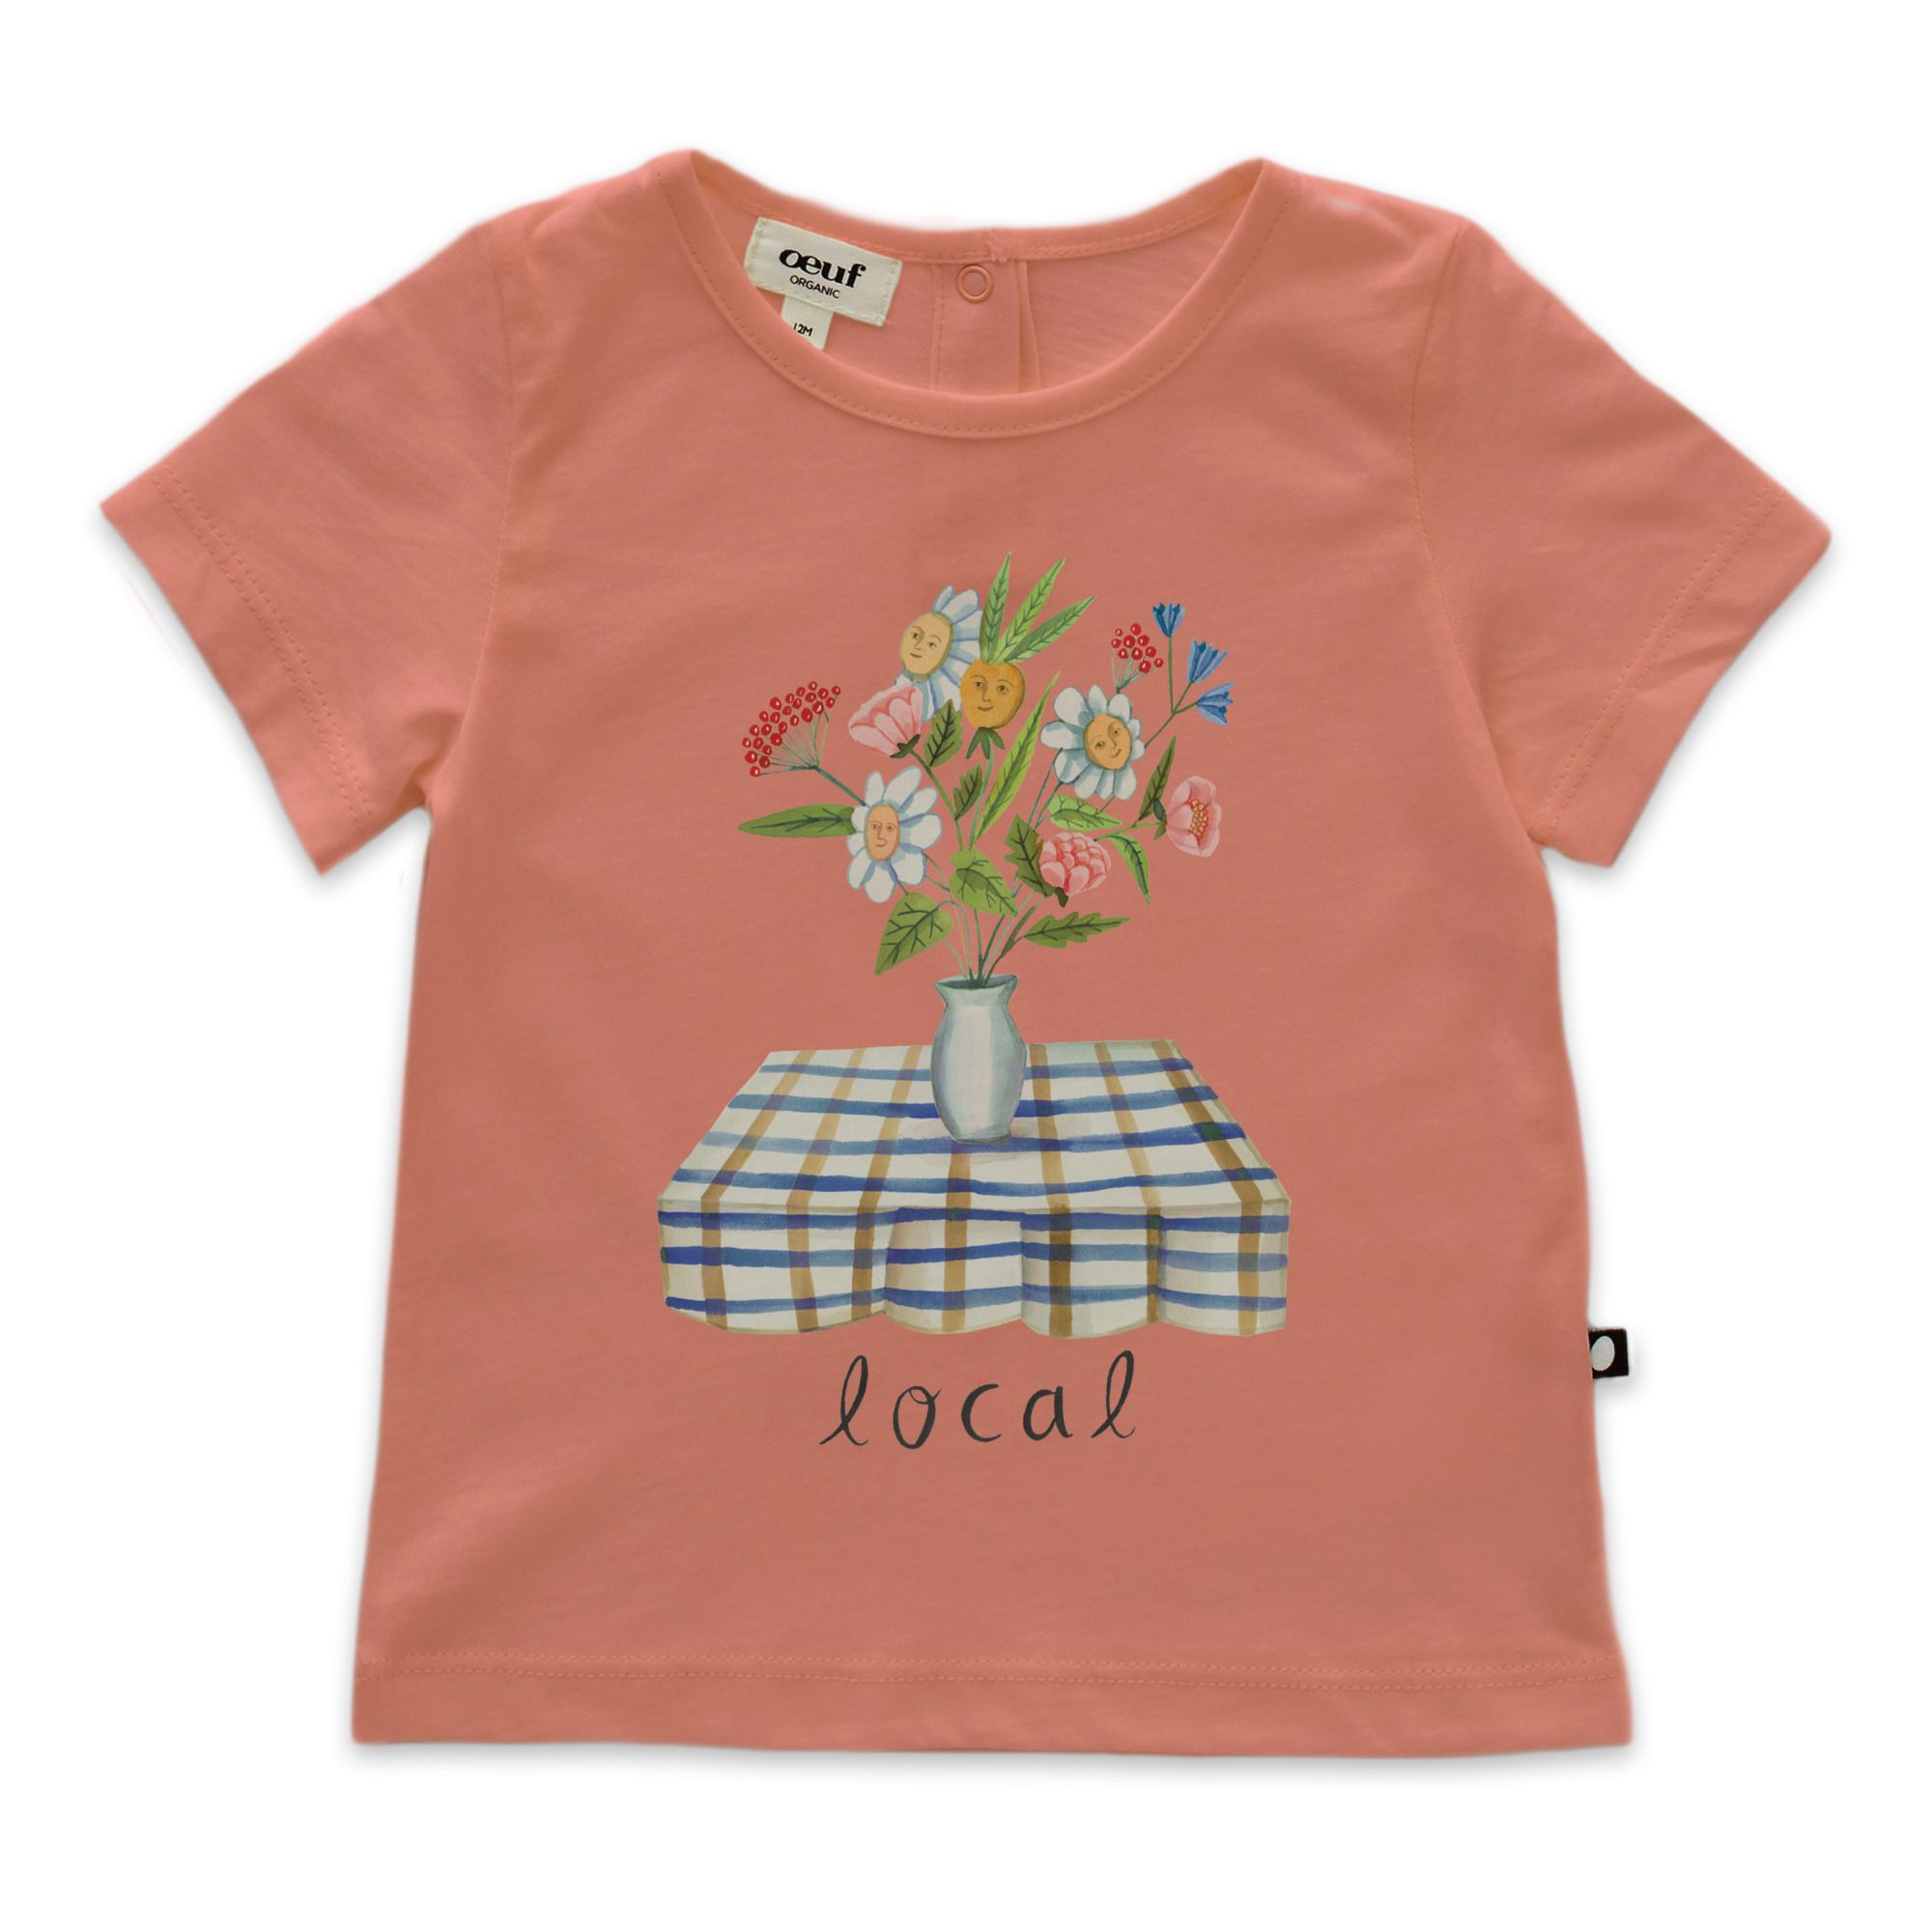 Oeuf NYC - T-shirt Local Bébé Coton Pima Bio - Fille - Rose